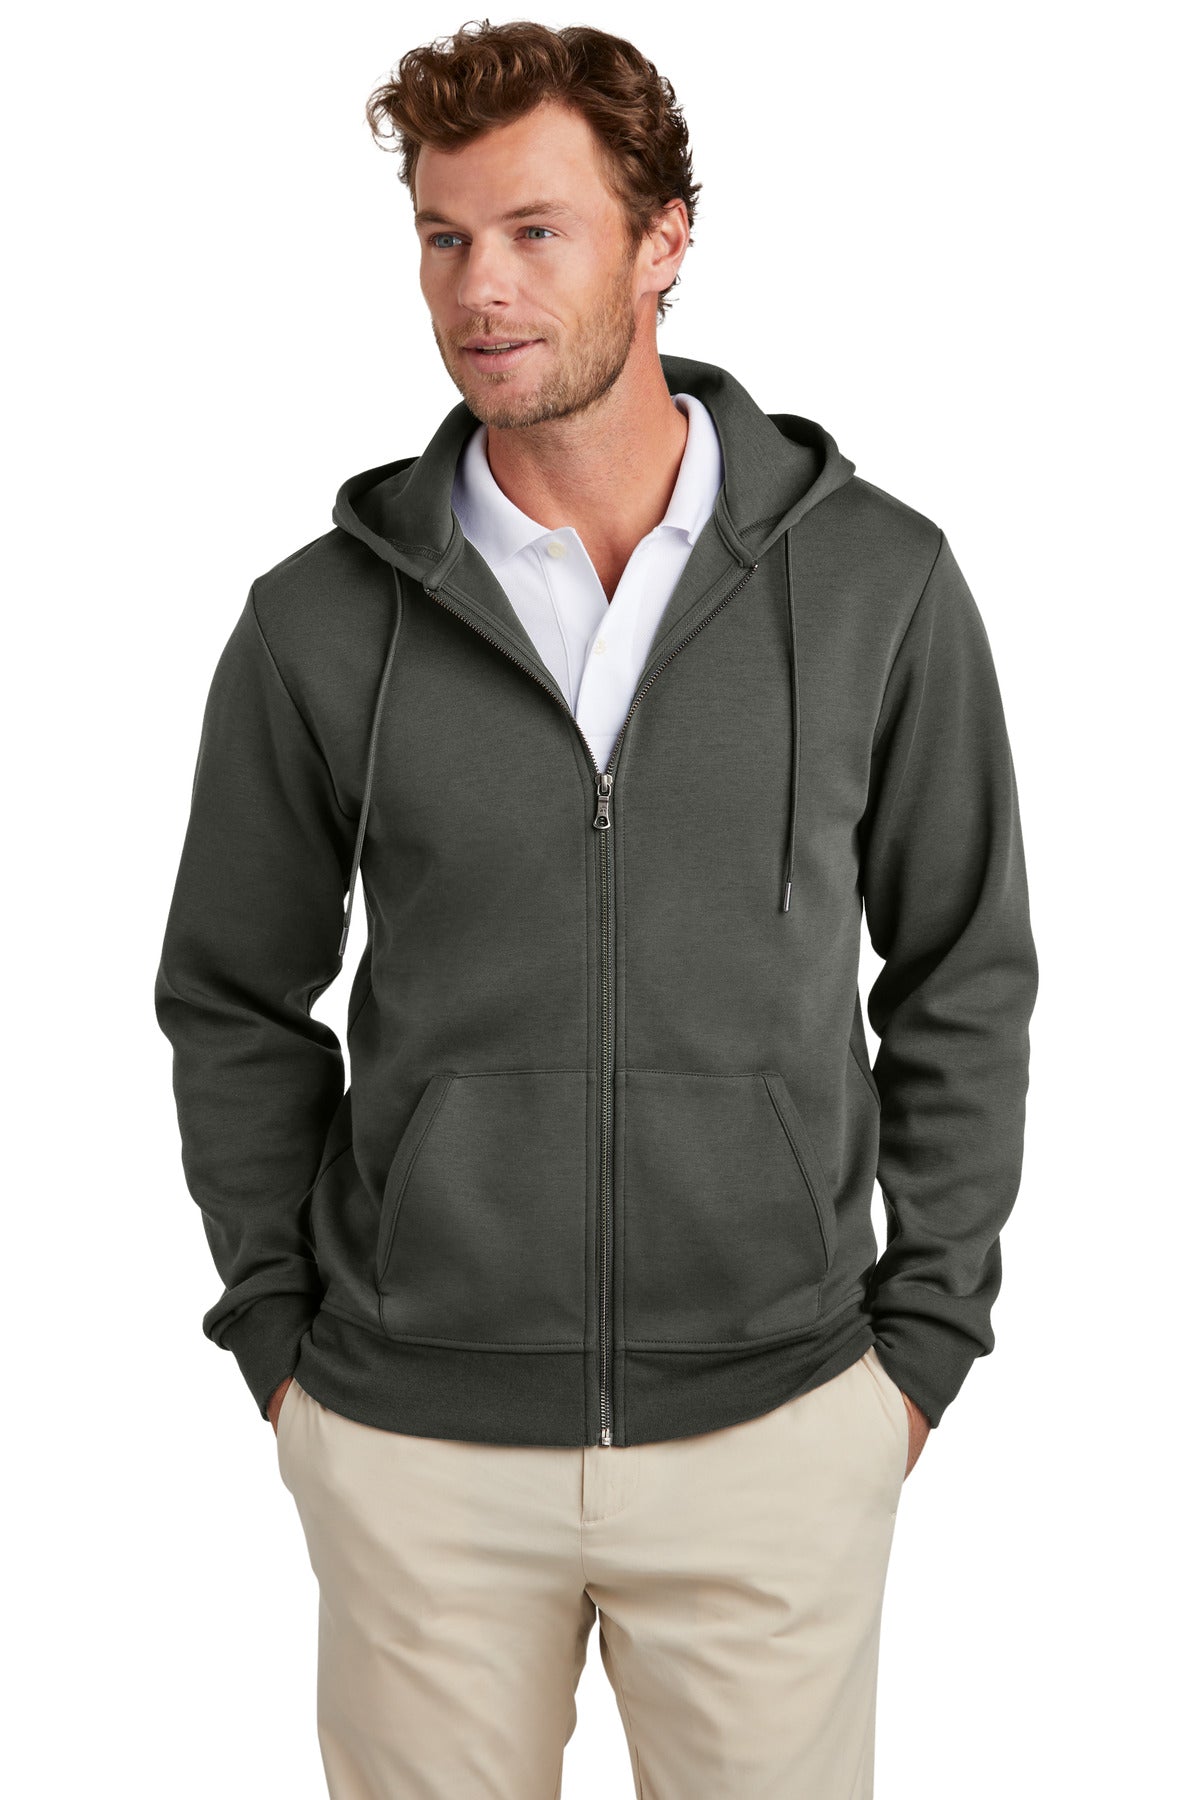 Photo of Brooks Brothers Sweatshirts/Fleece BB18208  color  Windsor Grey